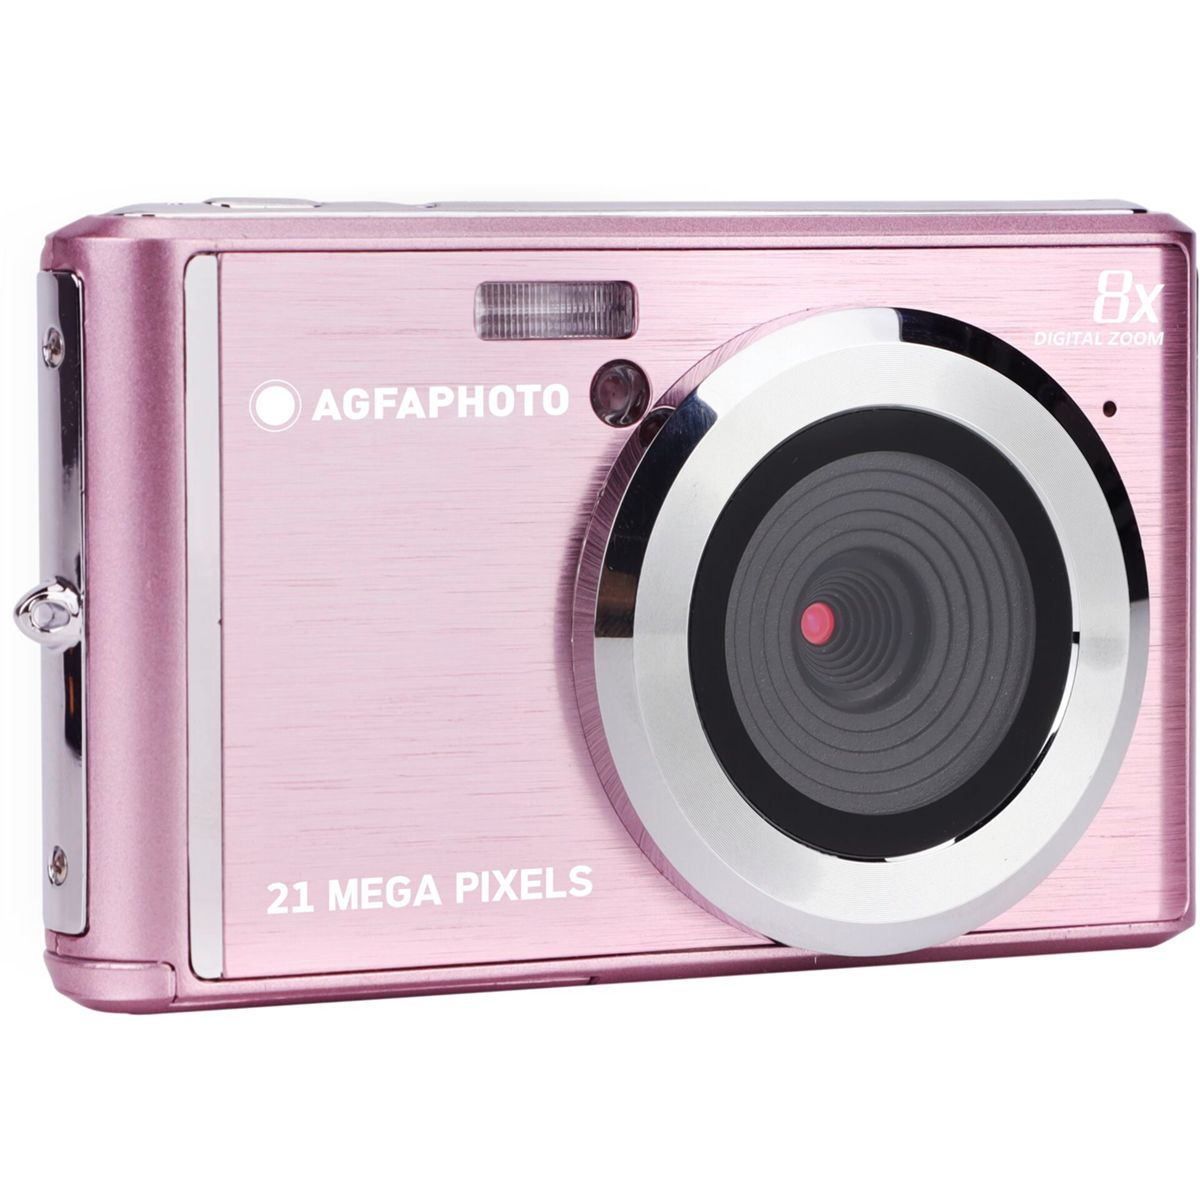 pink DC5200 Cam Digitalkamera pink AGFAPHOTO Compact